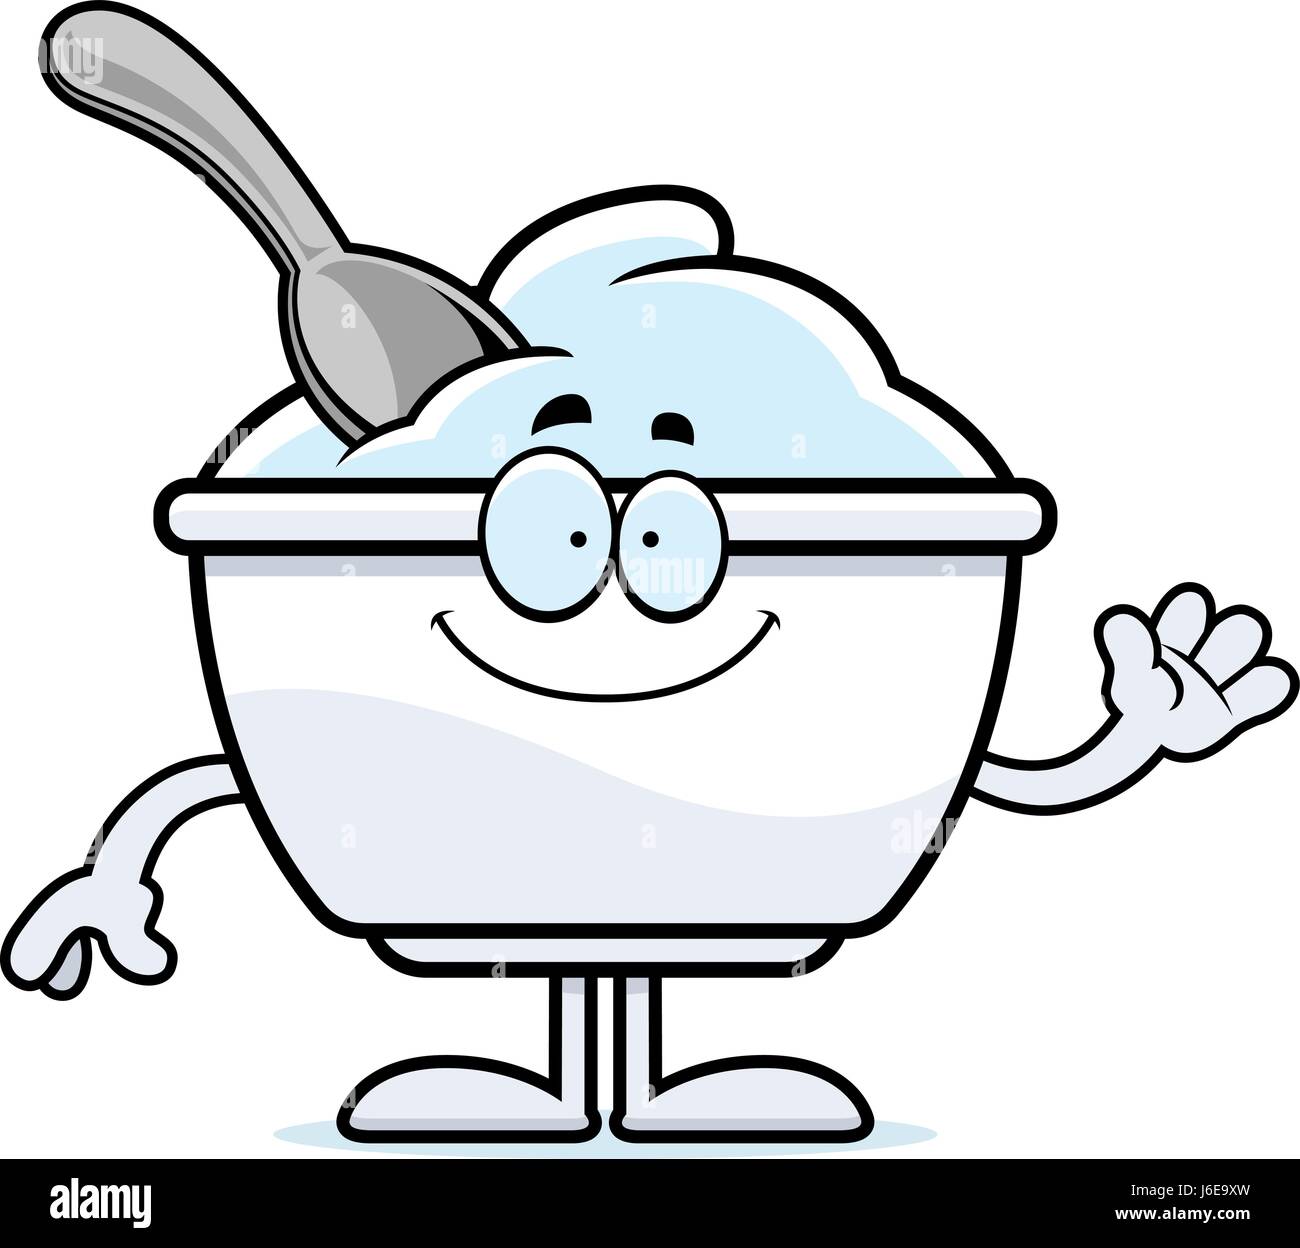 A cartoon illustration of a cup of yogurt waving. Stock Vector